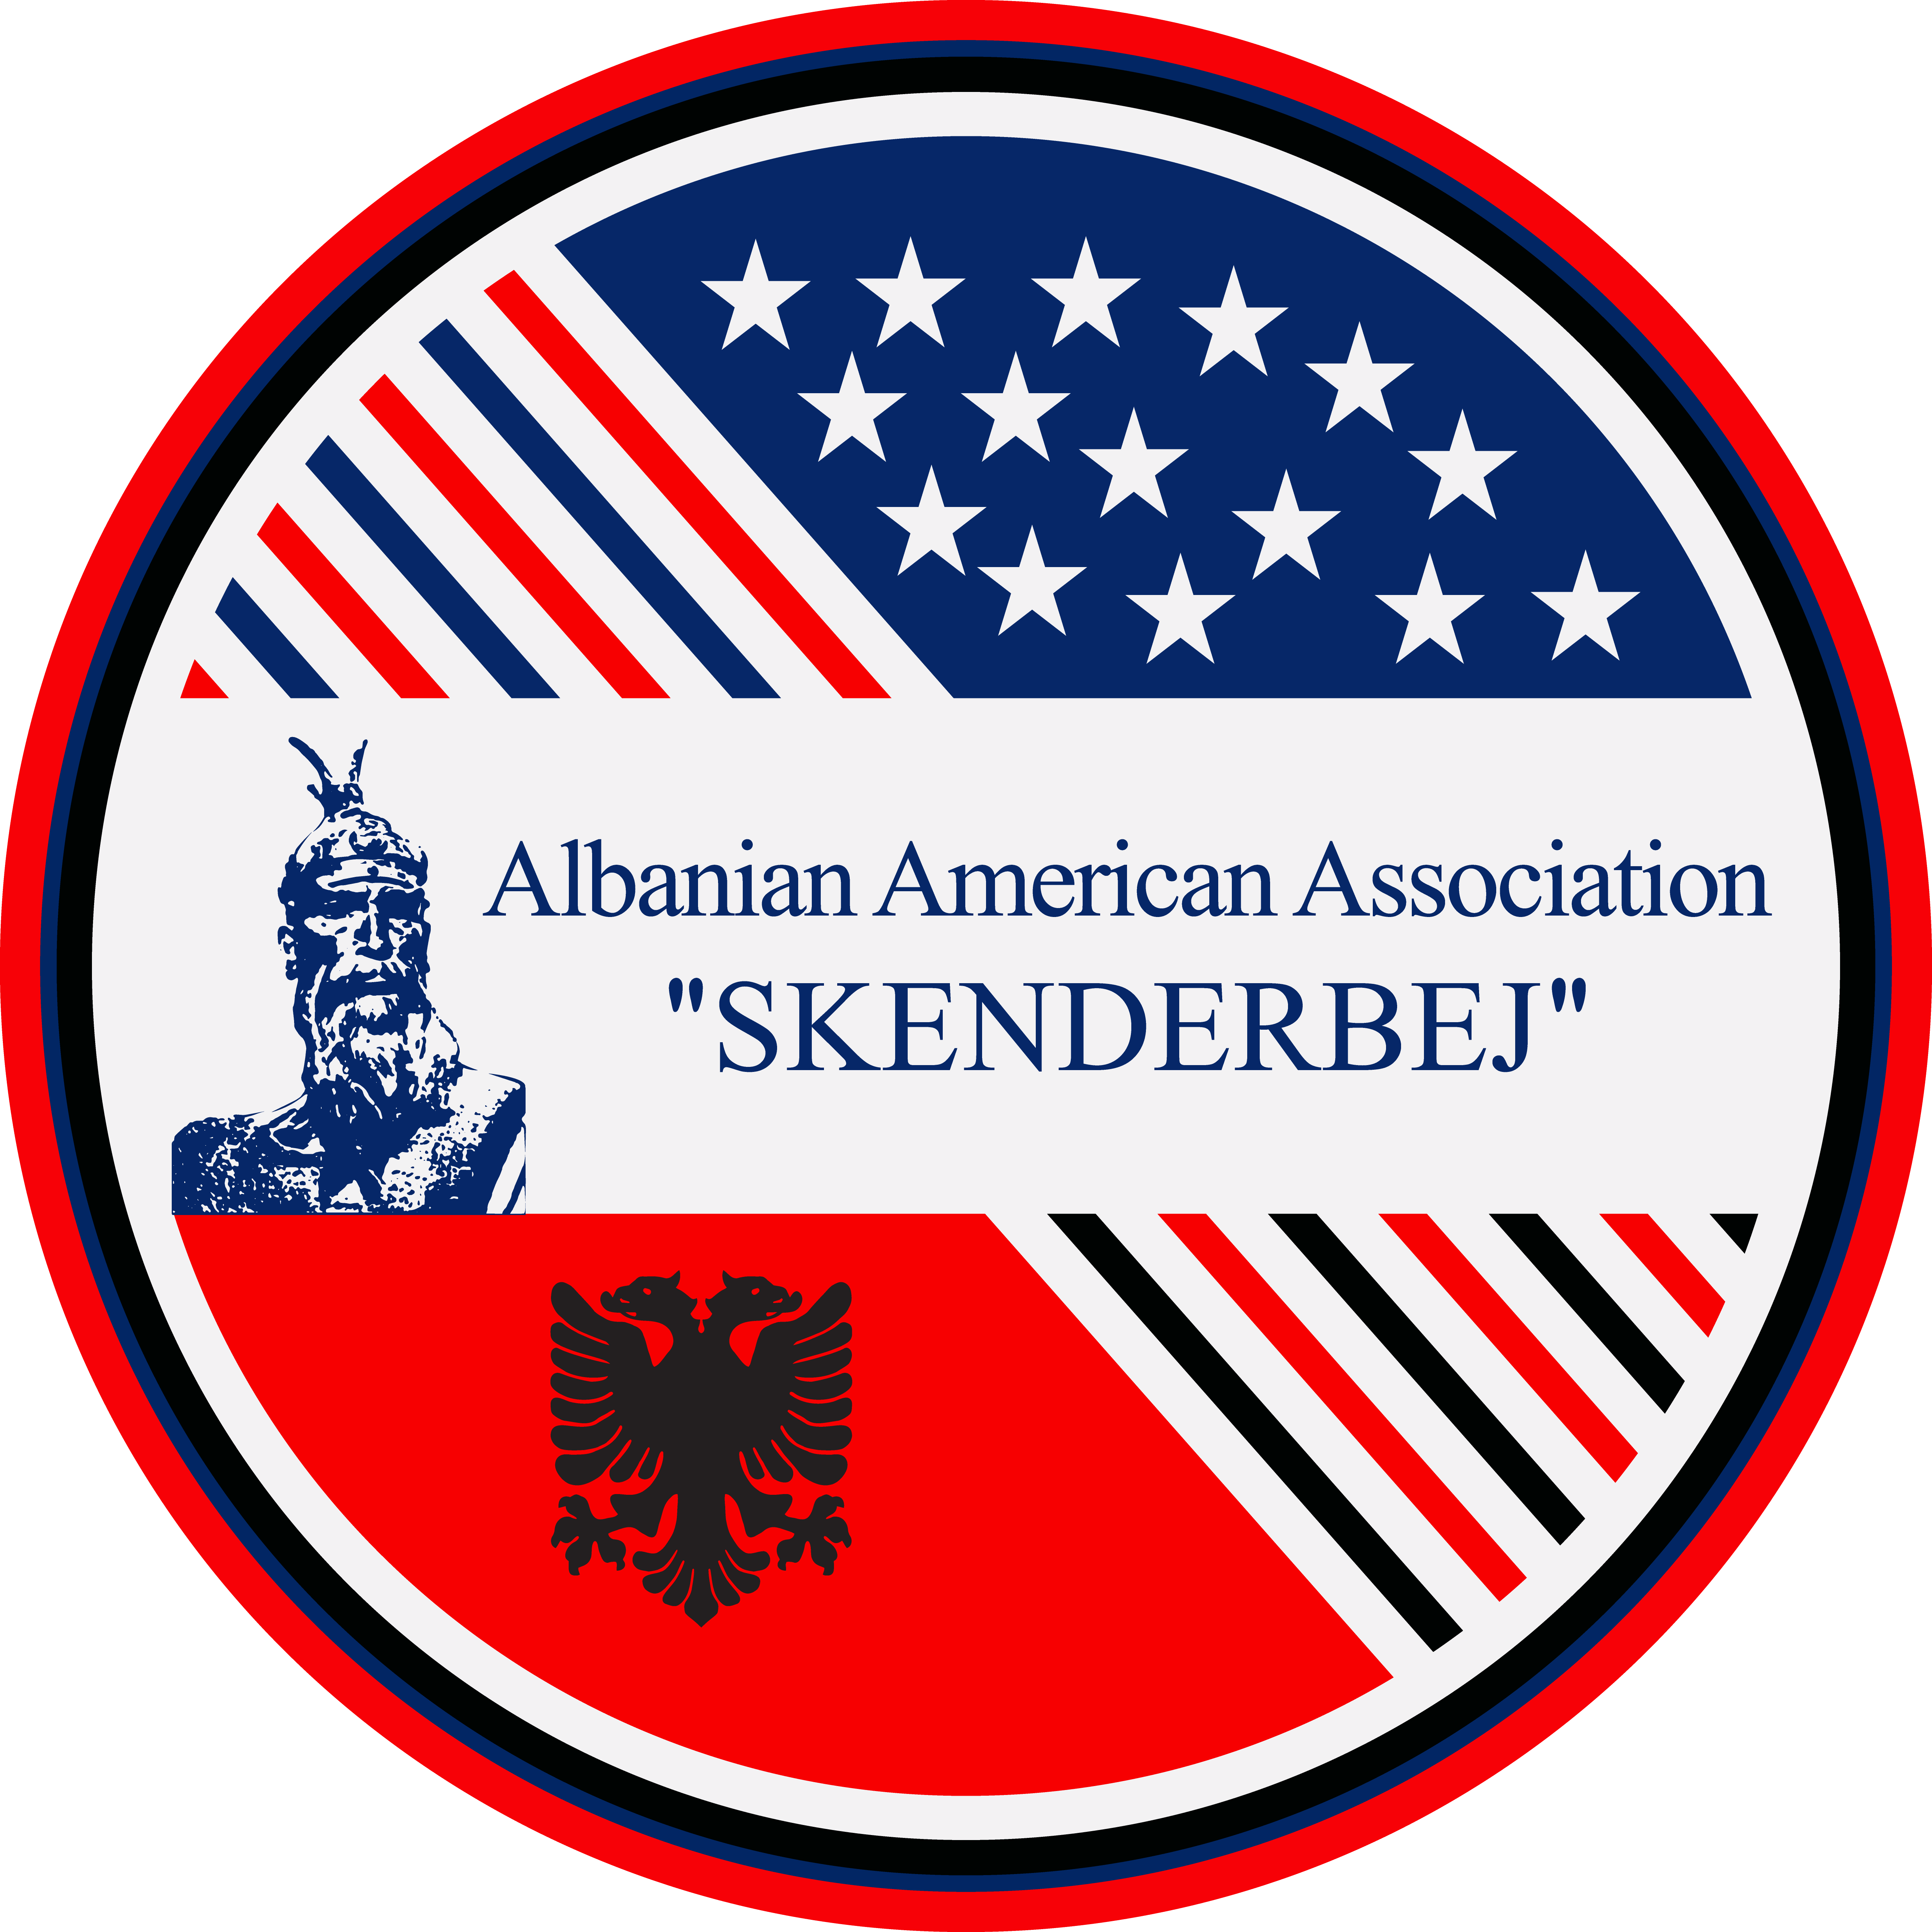 Albanian American Association Skenderbej